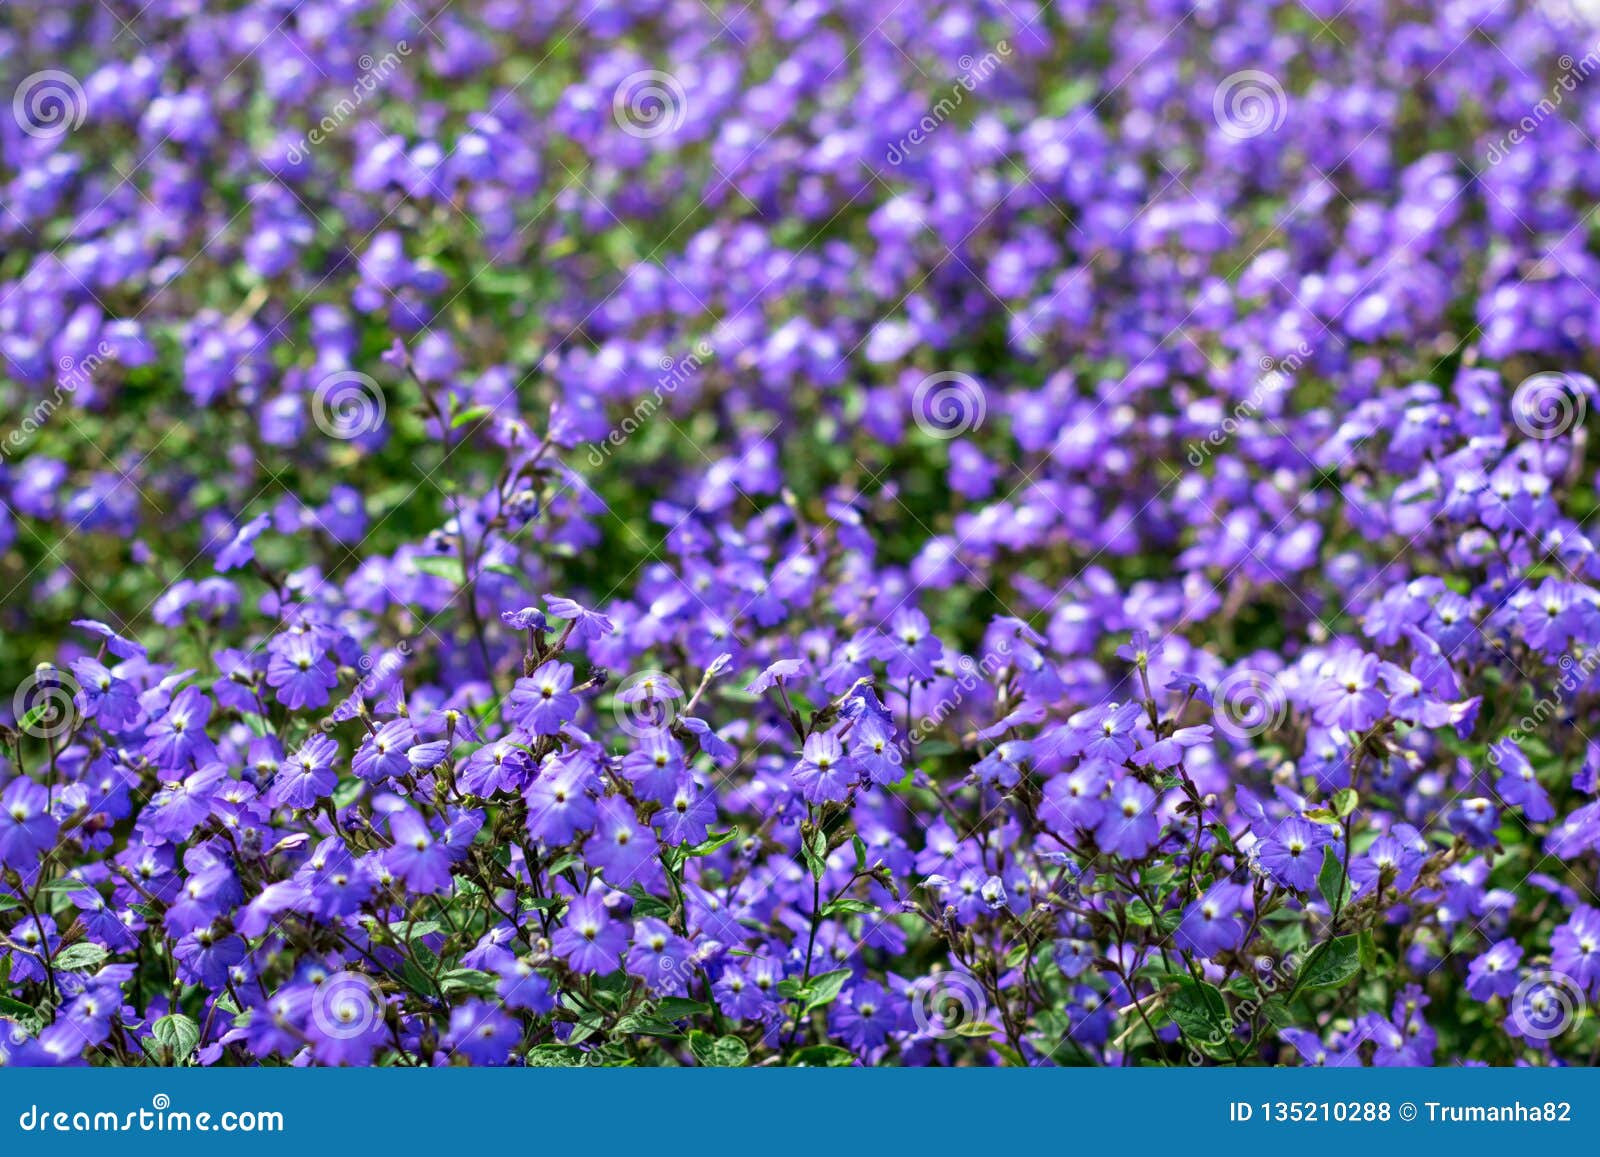 beautiful bush violets in the field